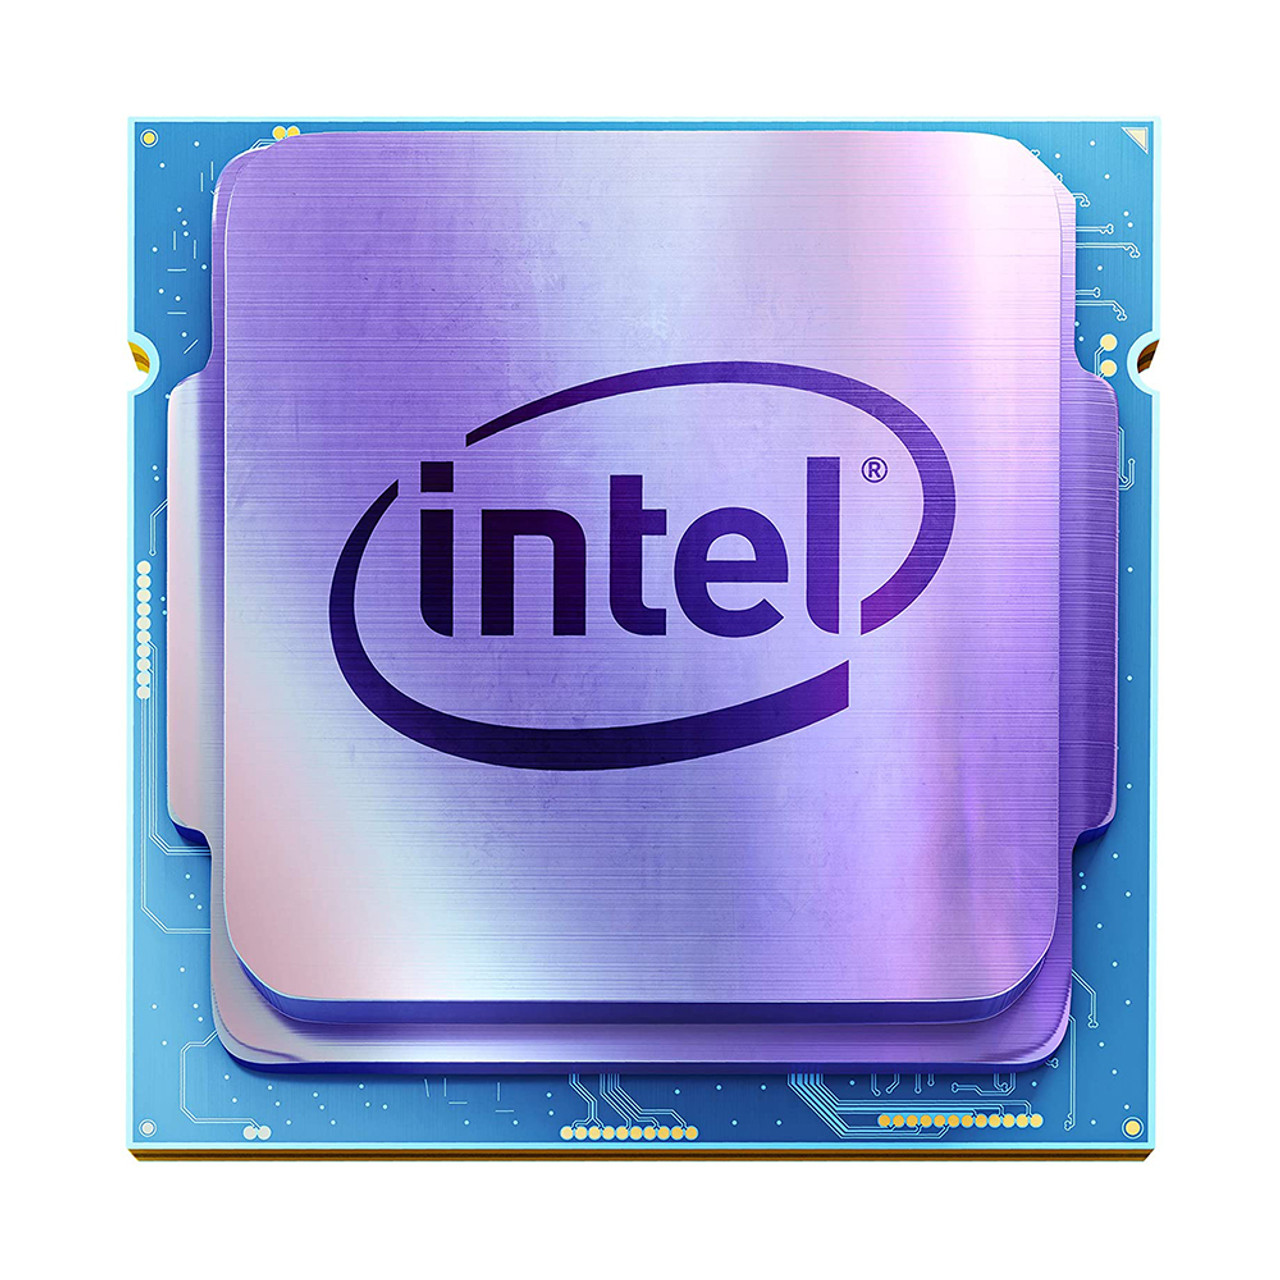 Intel Core i5-10400 Desktop Processor 6 Cores up to 4.3 GHz LGA1200 (Intel  400 Series Chipset) 65W, Model Number: BX8070110400